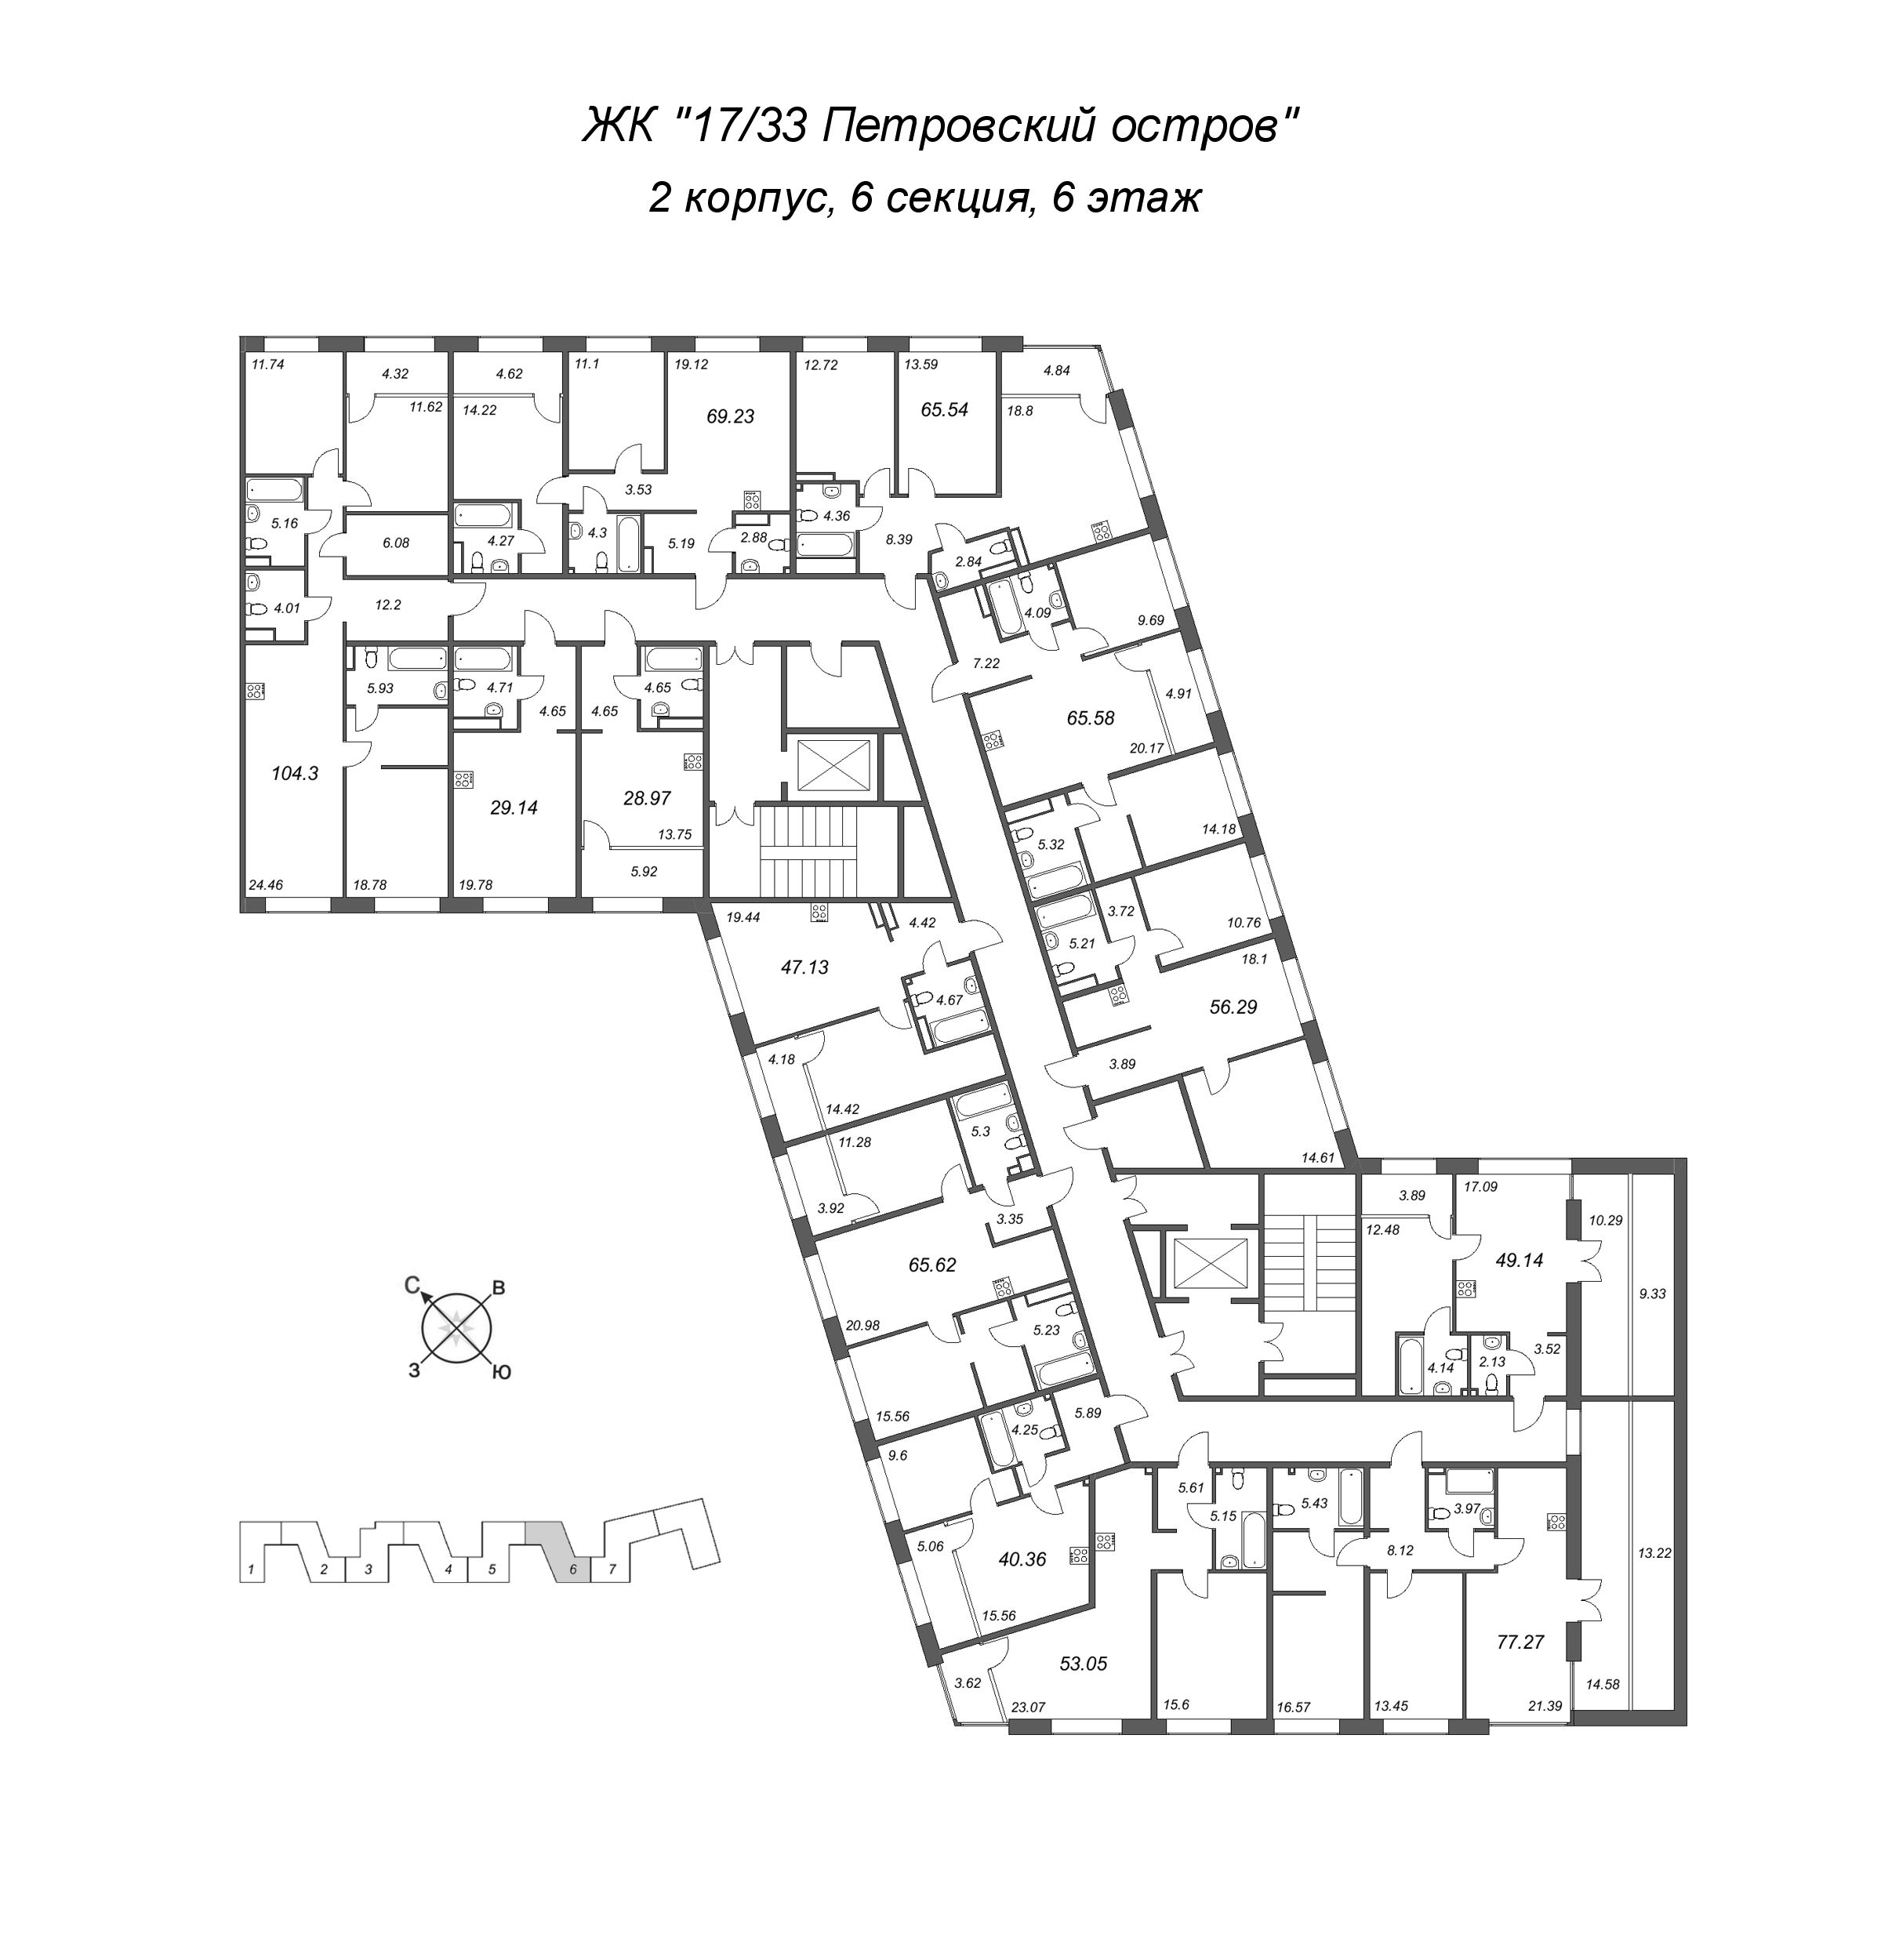 3-комнатная (Евро) квартира, 65.62 м² - планировка этажа